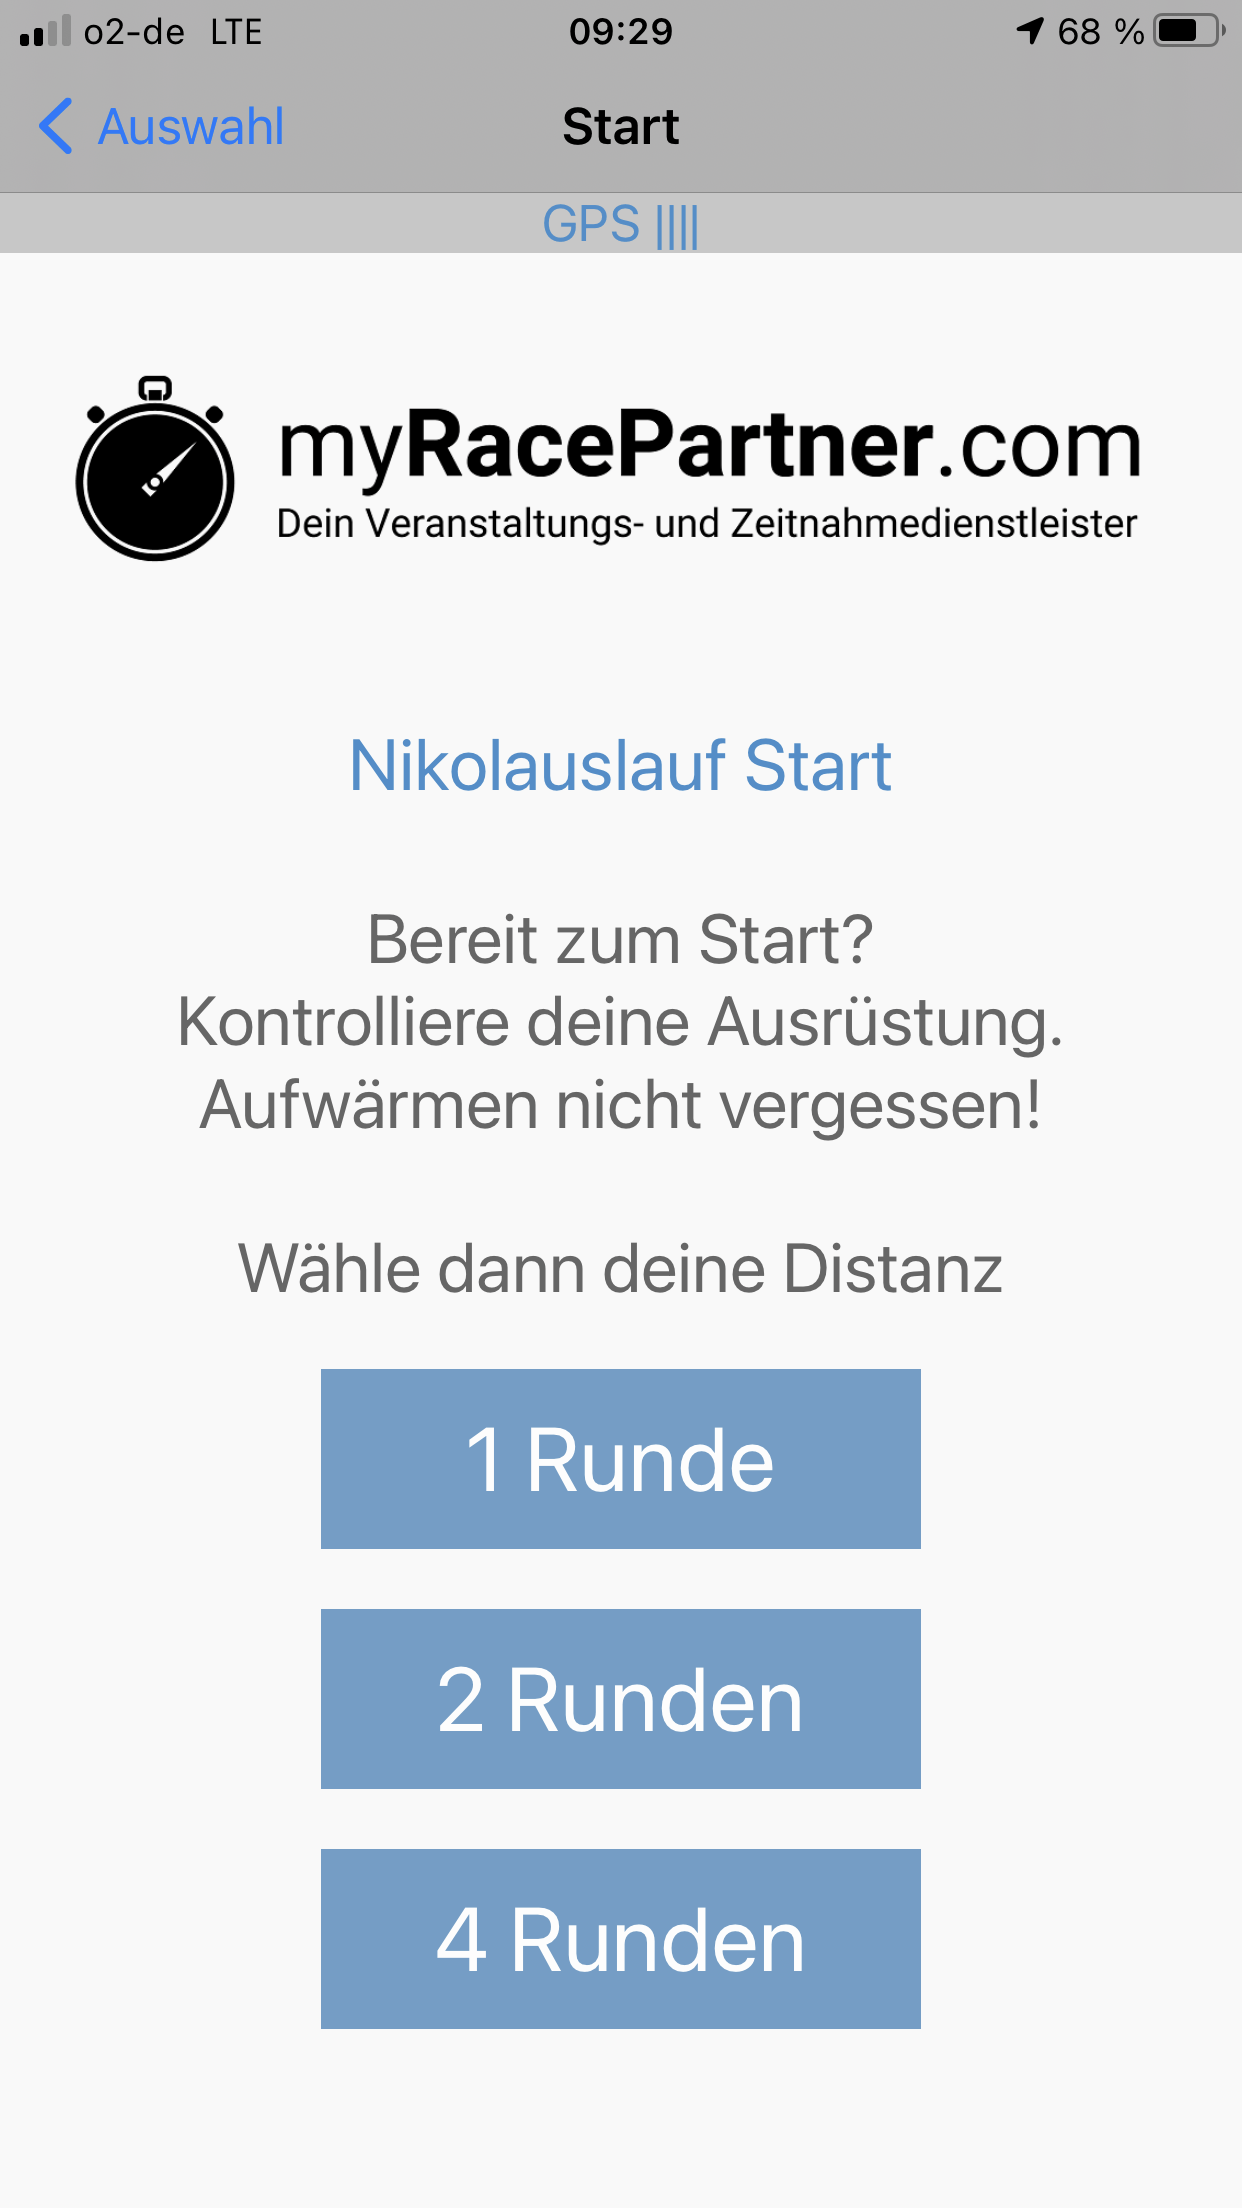 myRacePartner.com - Die App am Start Runden